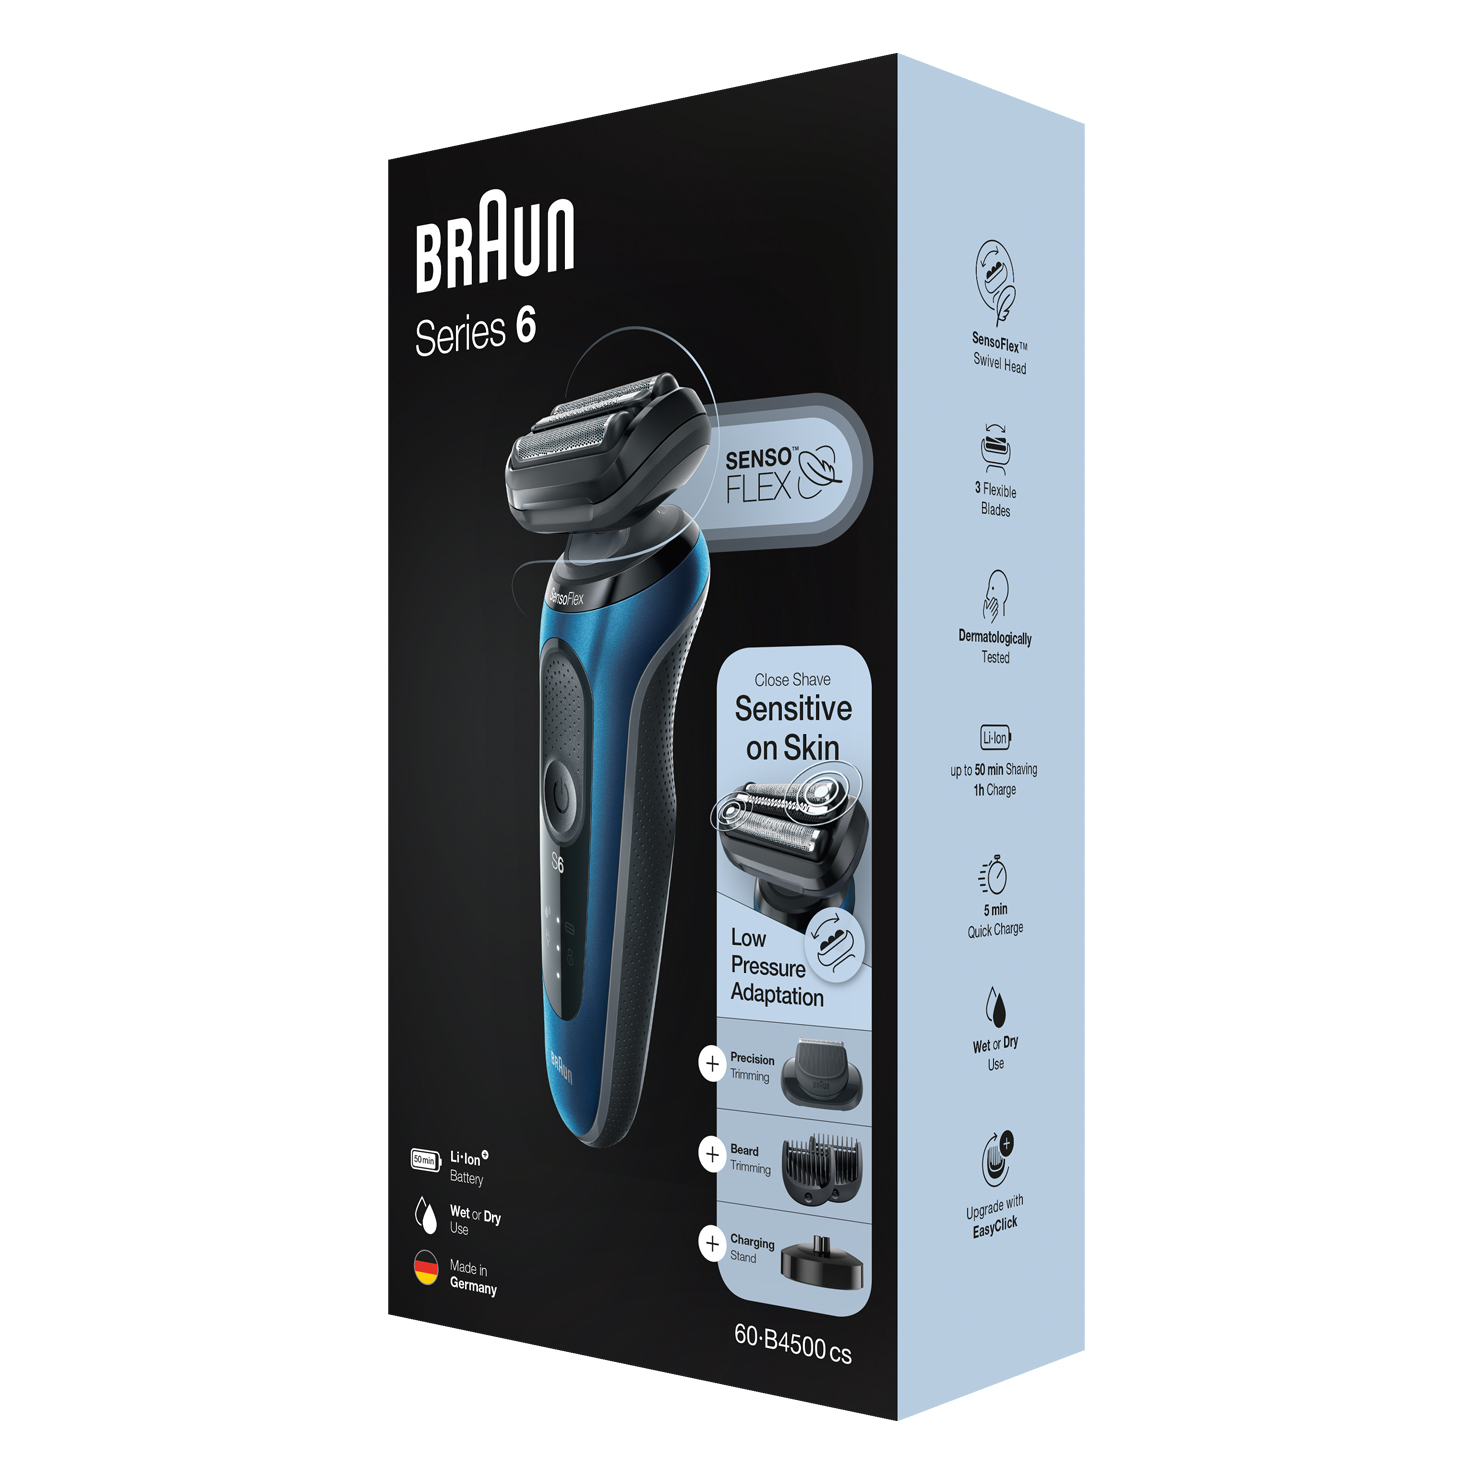 Braun Series 6 60-B4500cs Electric Shaver